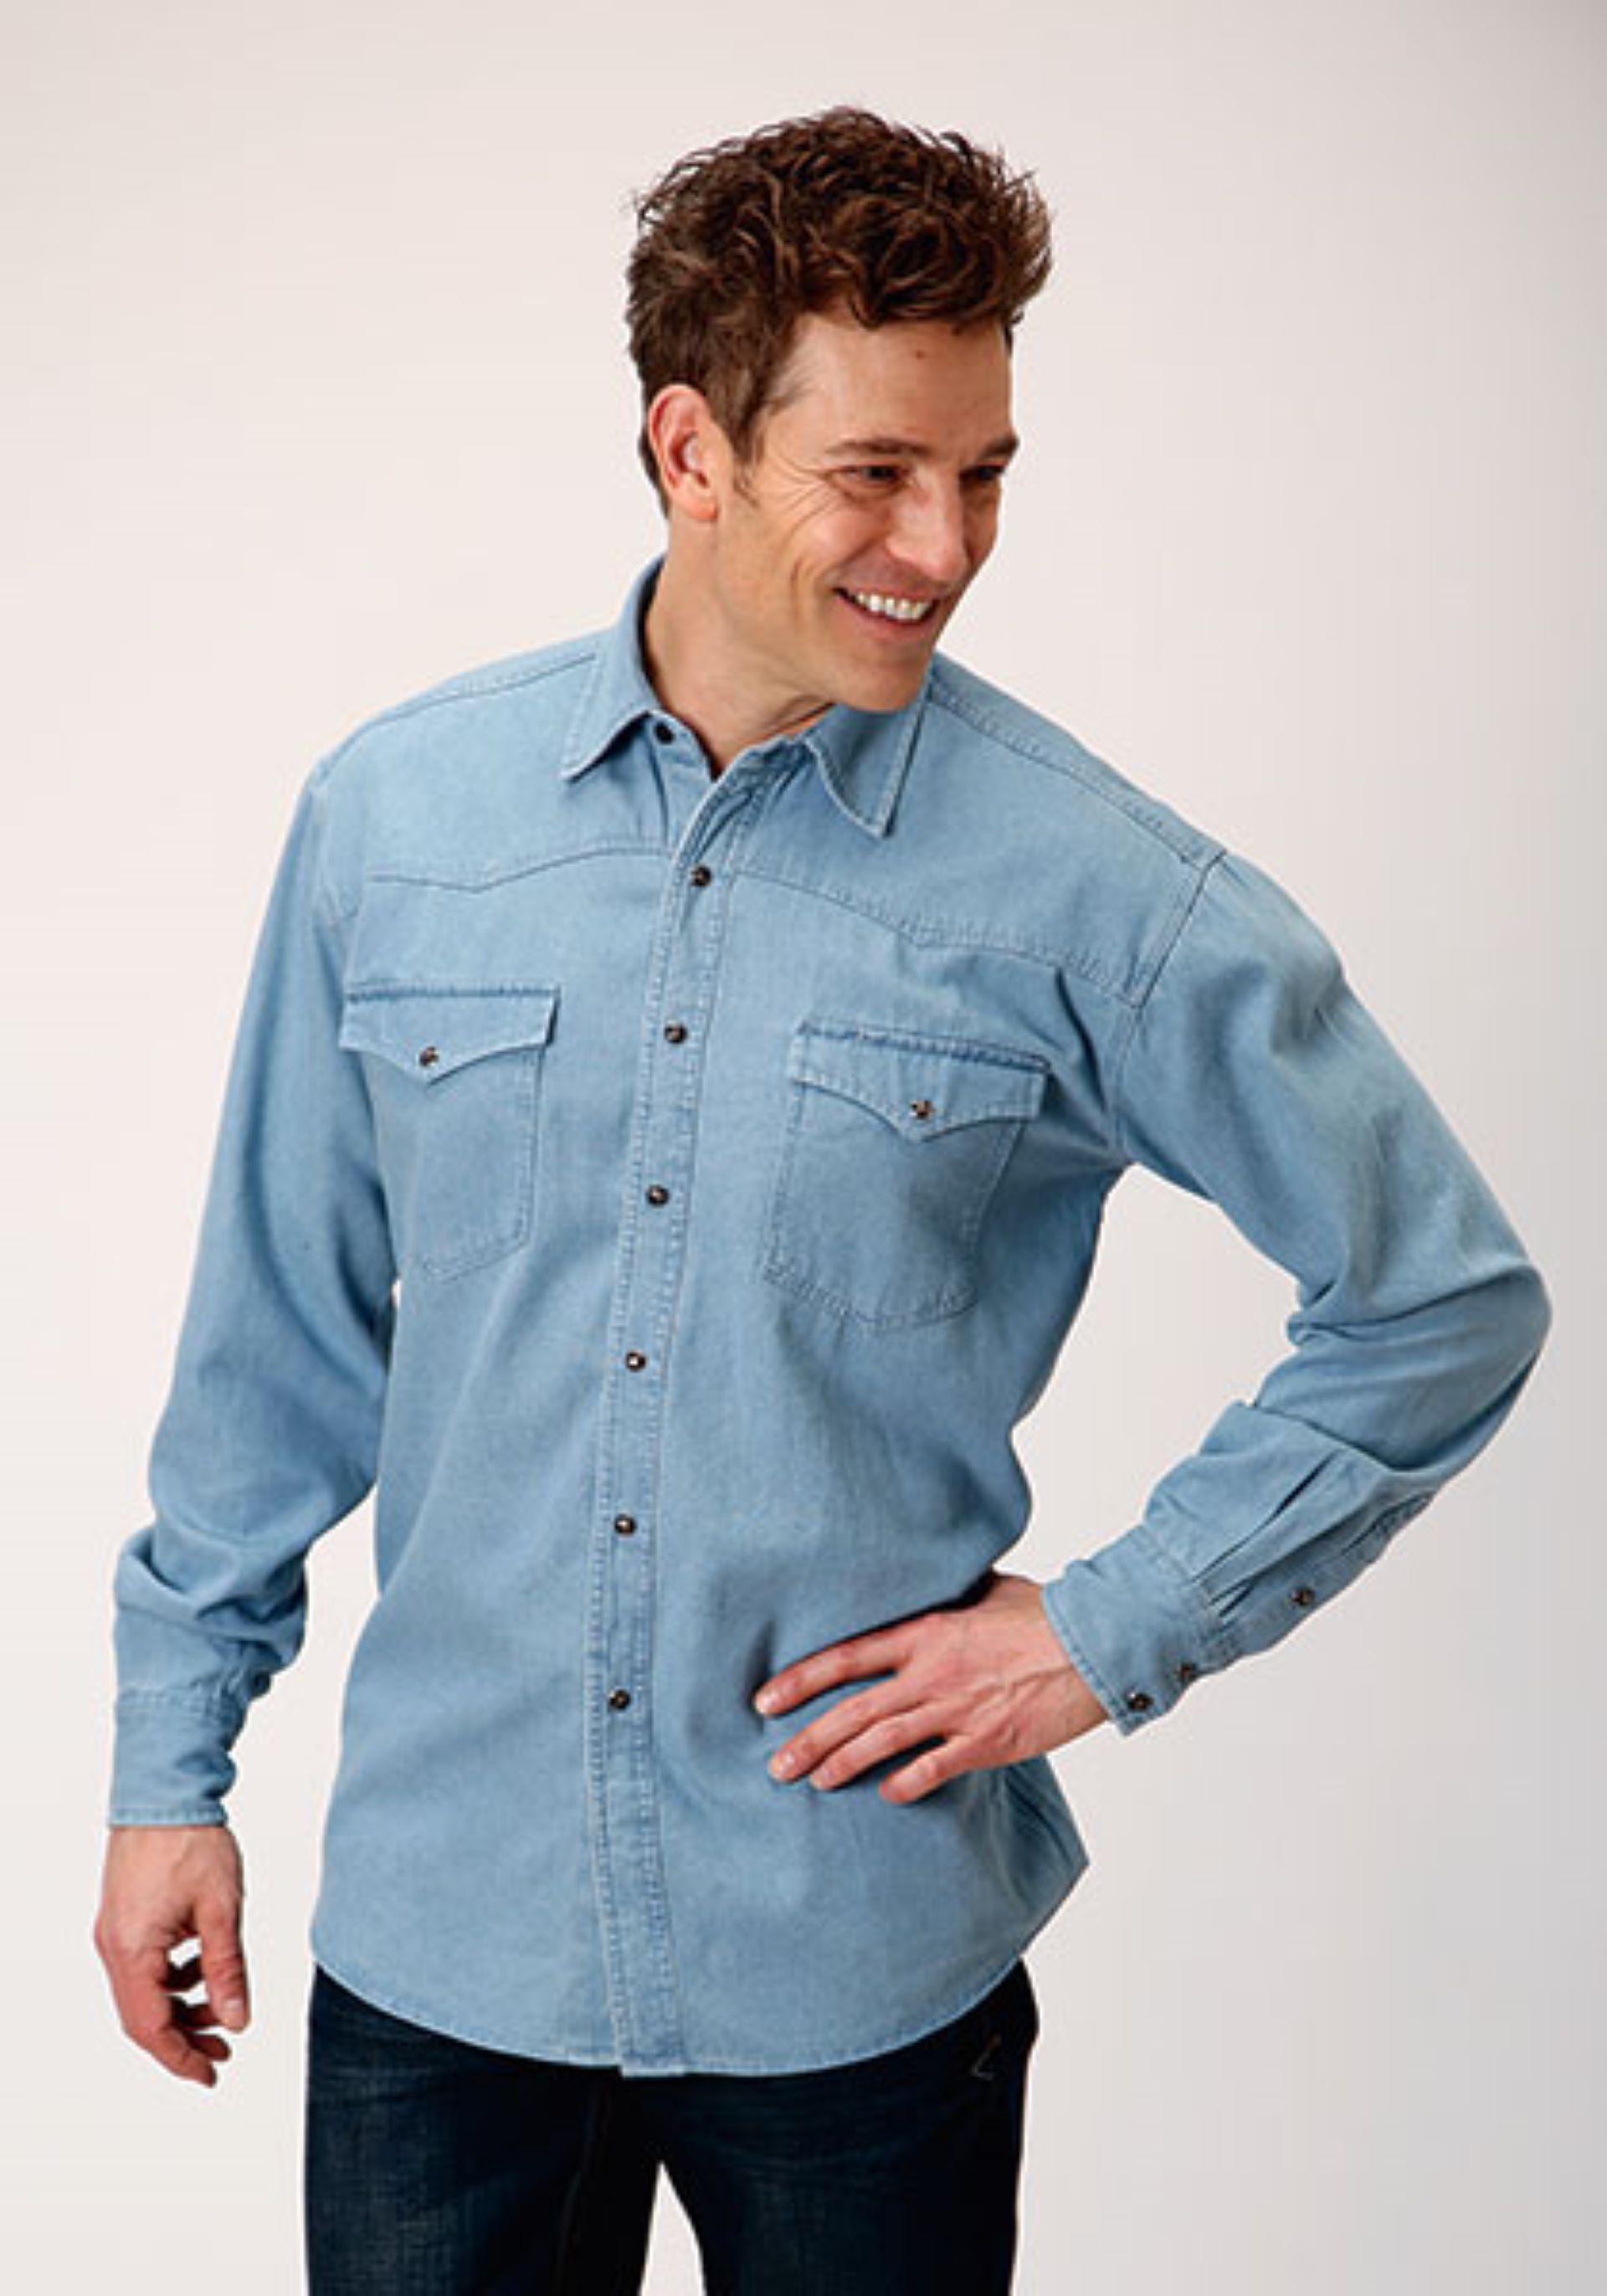 Mens long sleeve western shirt - 03-001-0594-0041 BU